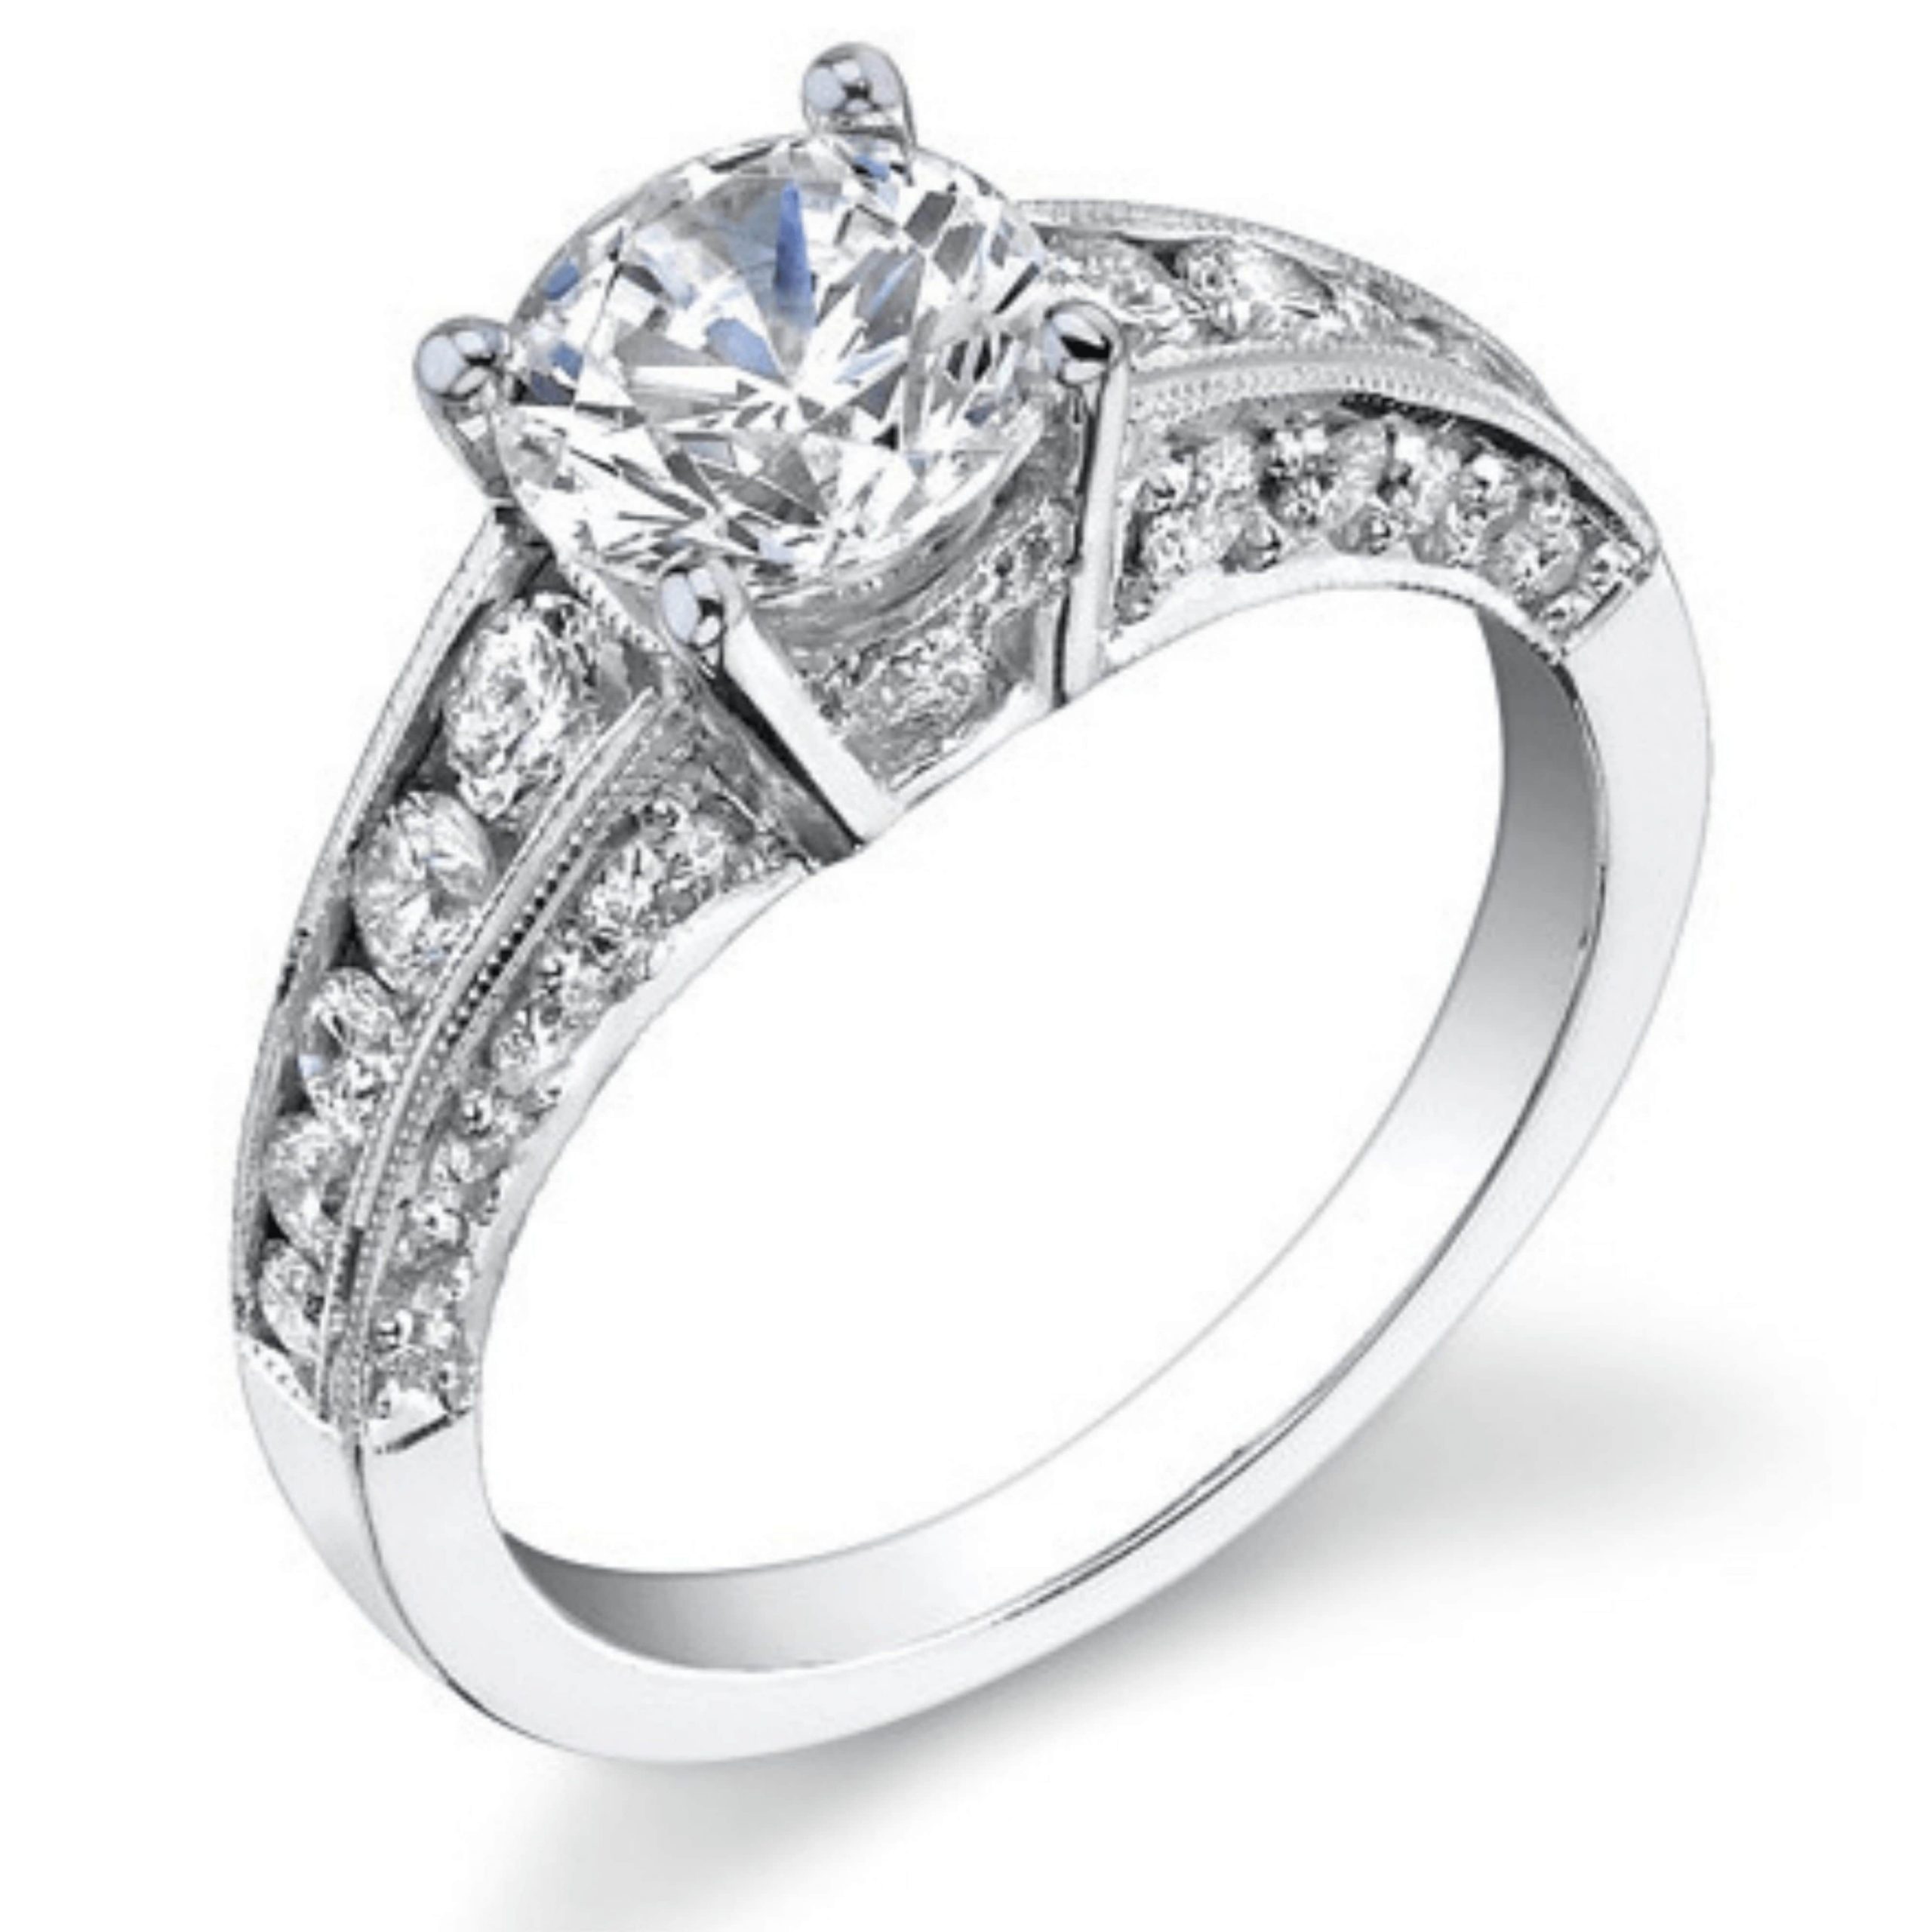 Vintage Inspired Half Circle Tapered Diamond Engagement Ring